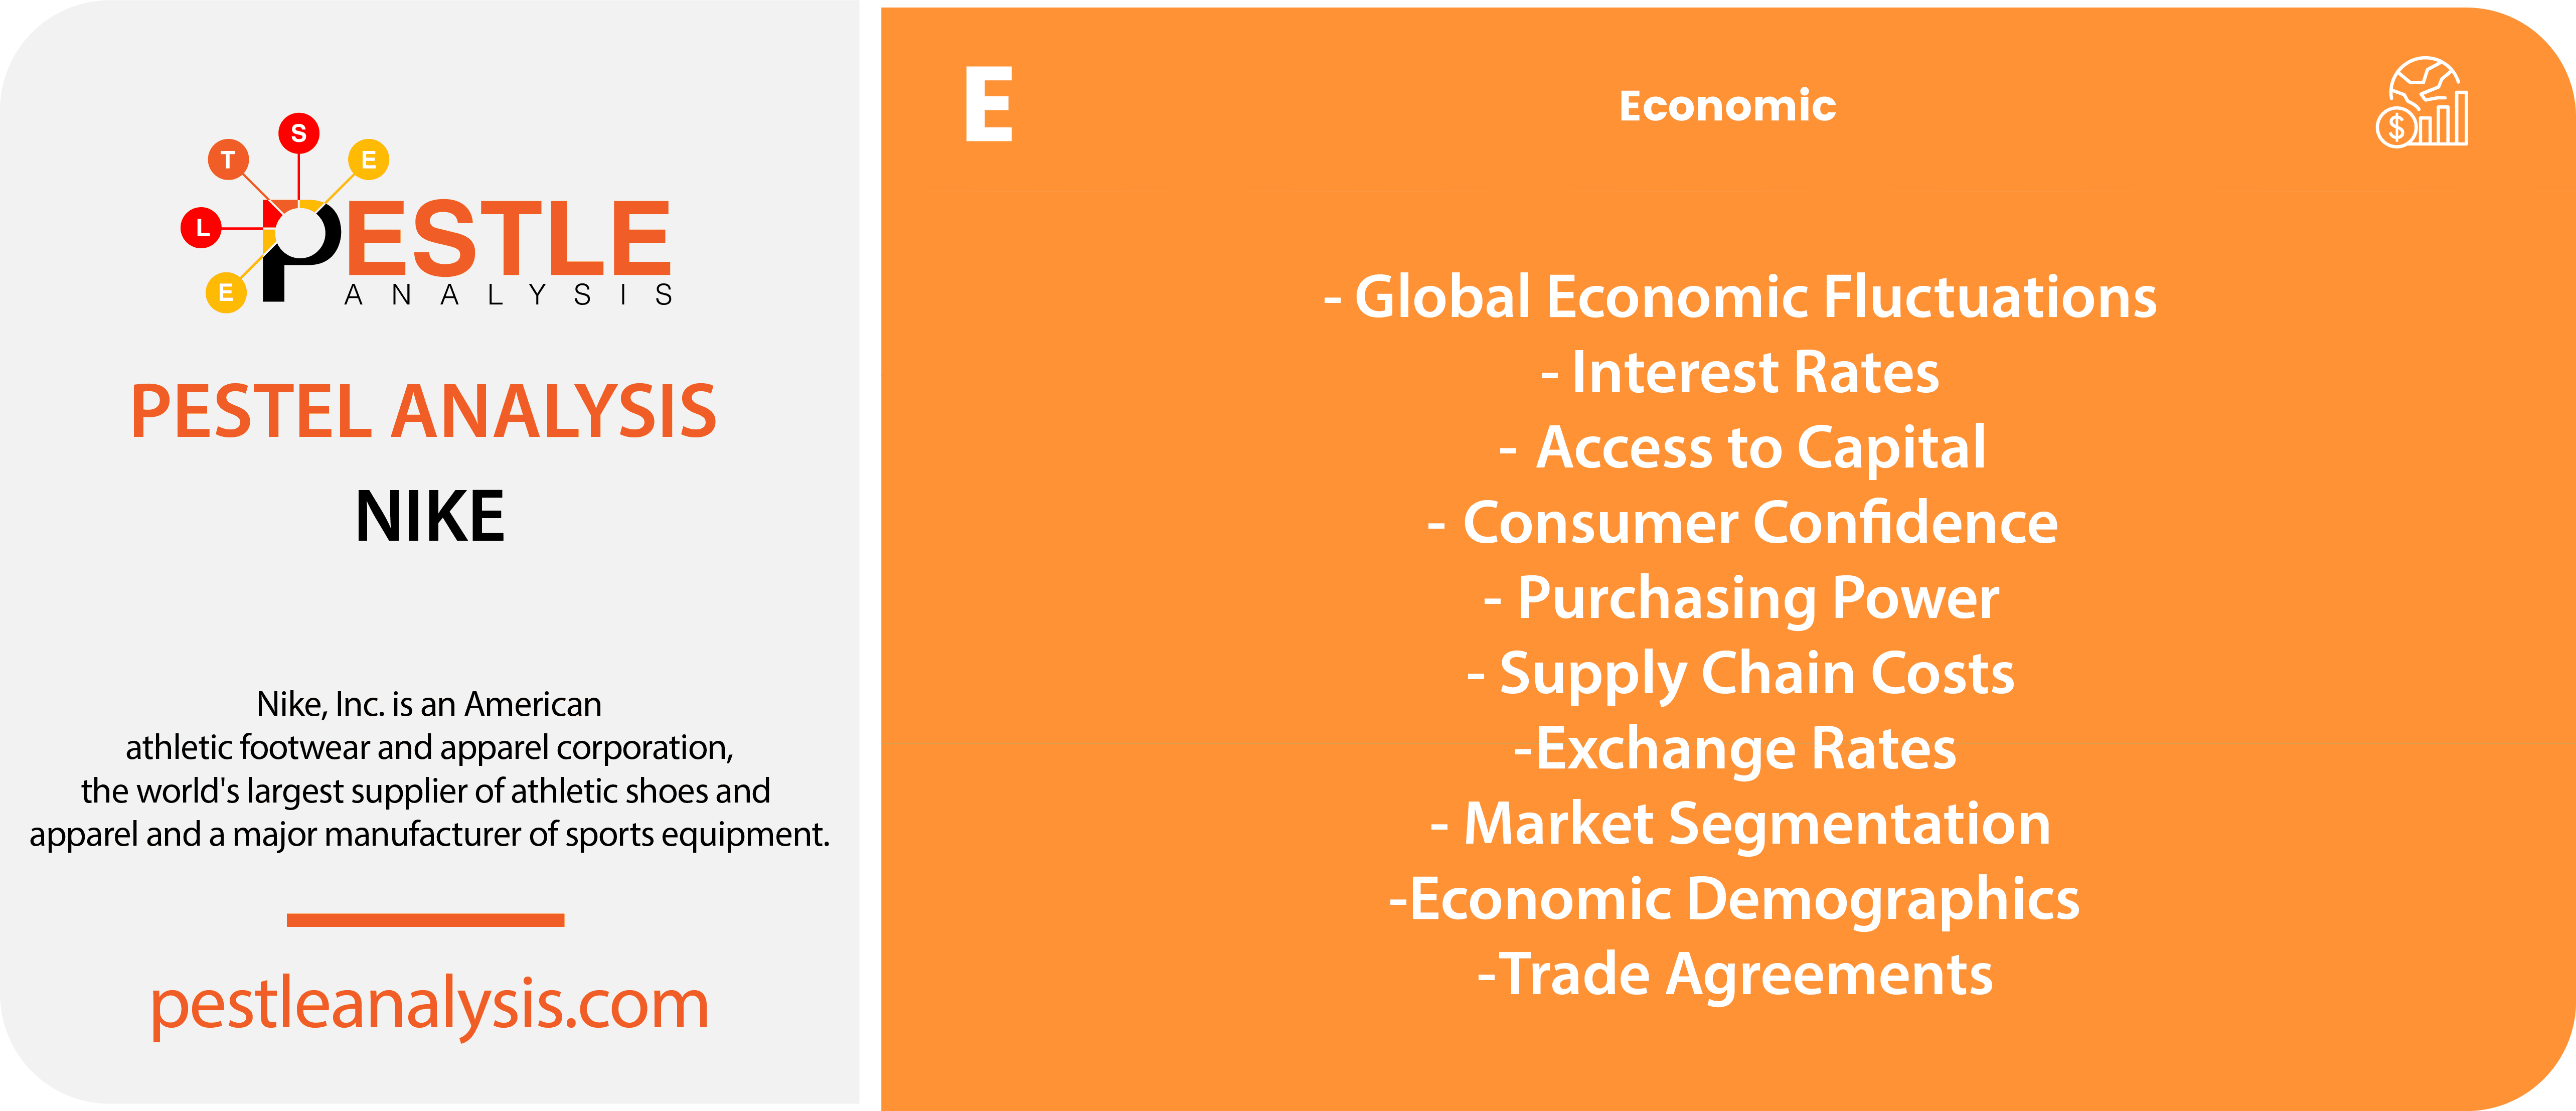 nike-pestle-analysis-economic-factors-template